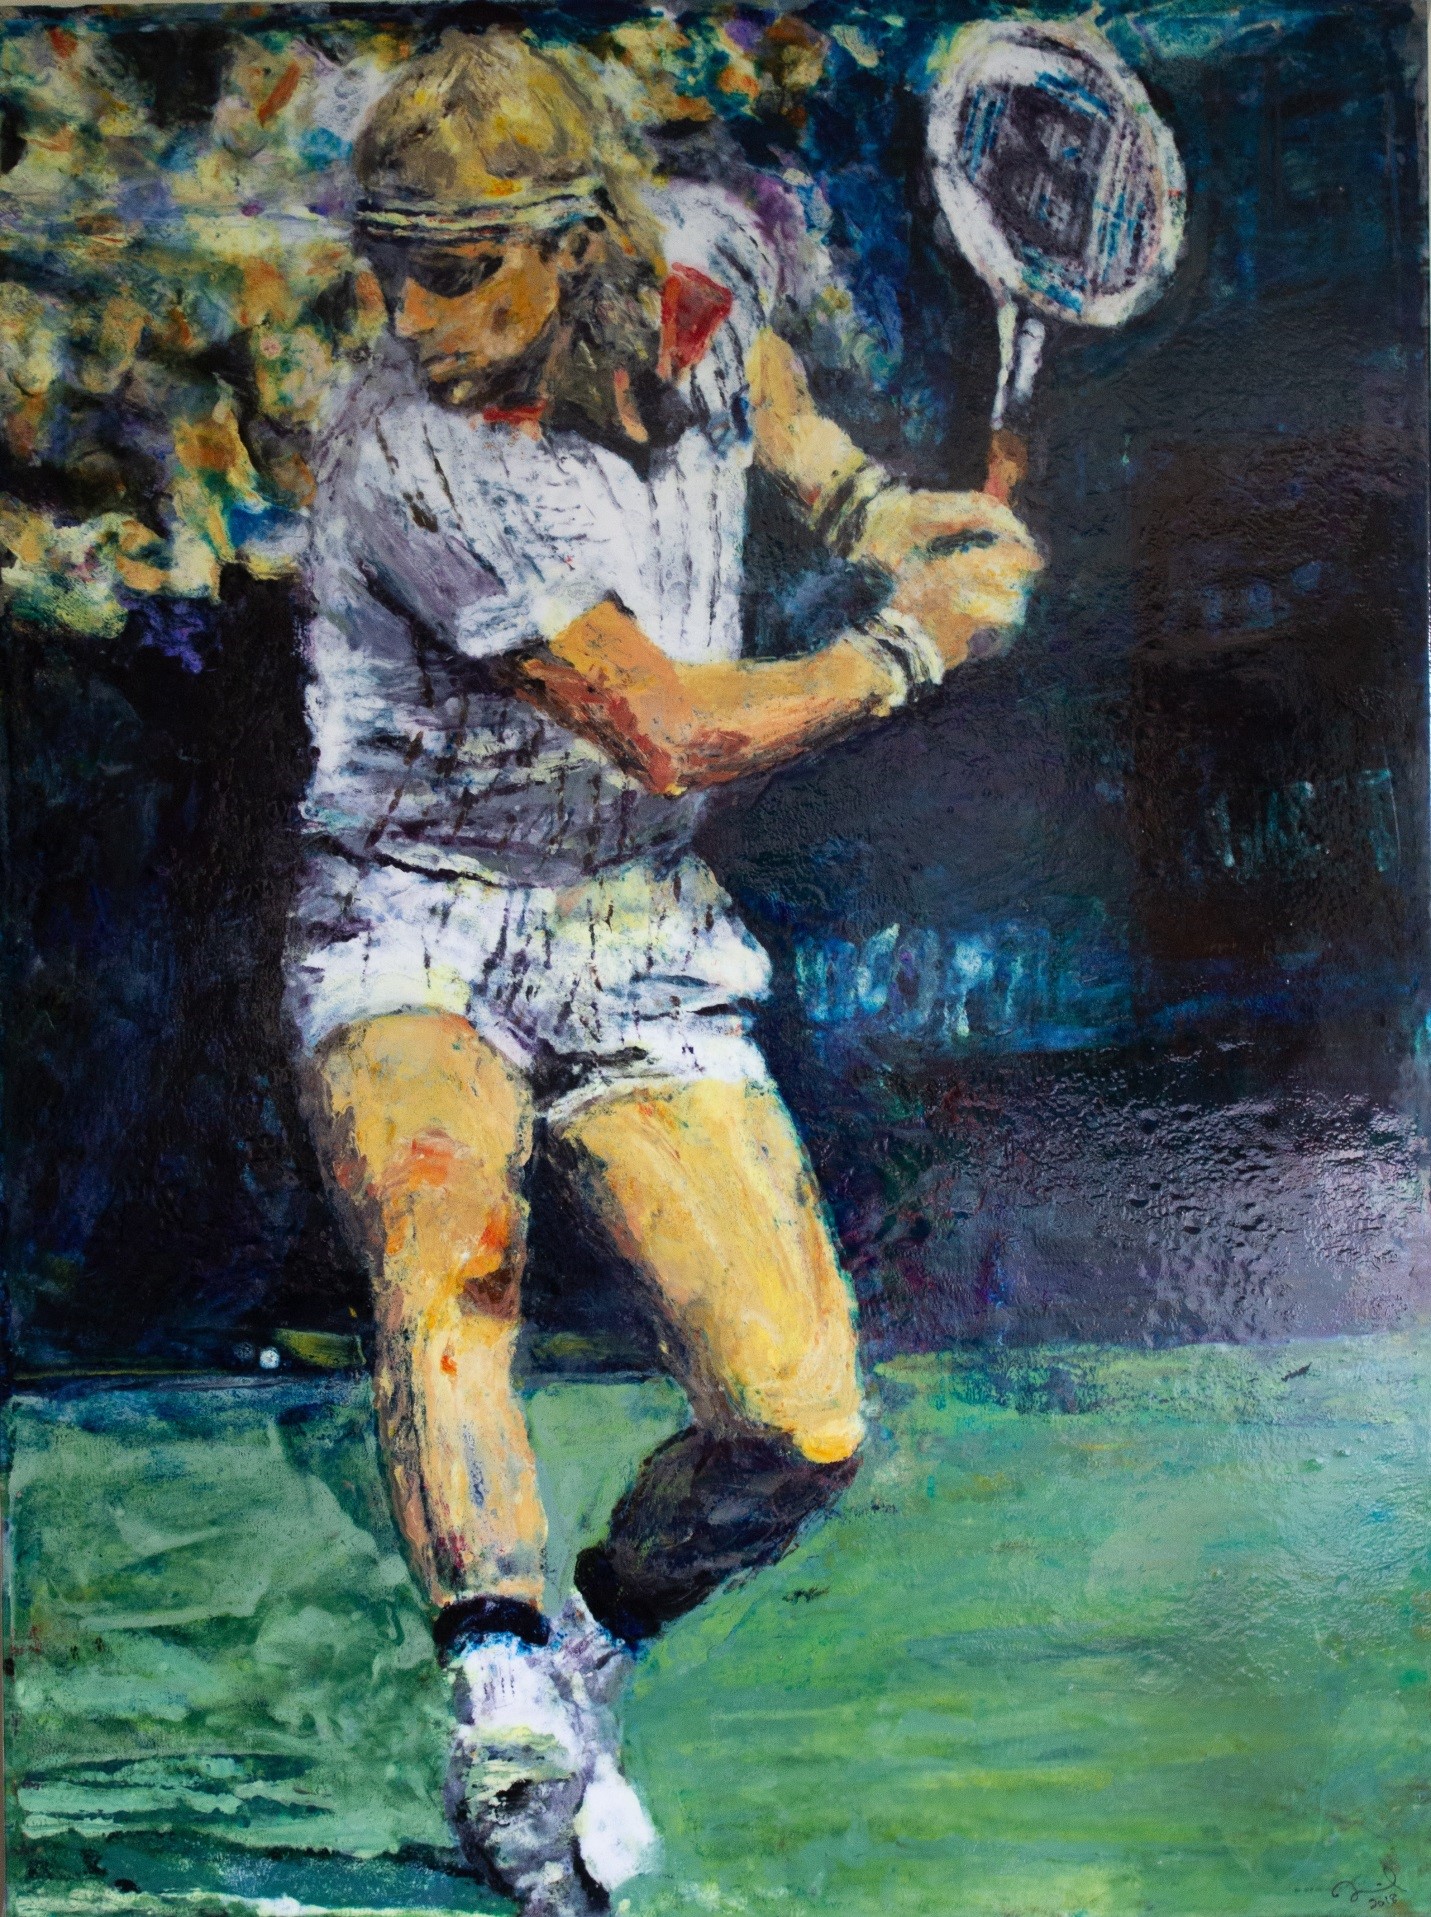 Bjorn Borg, 1976 Wimbledon Champion